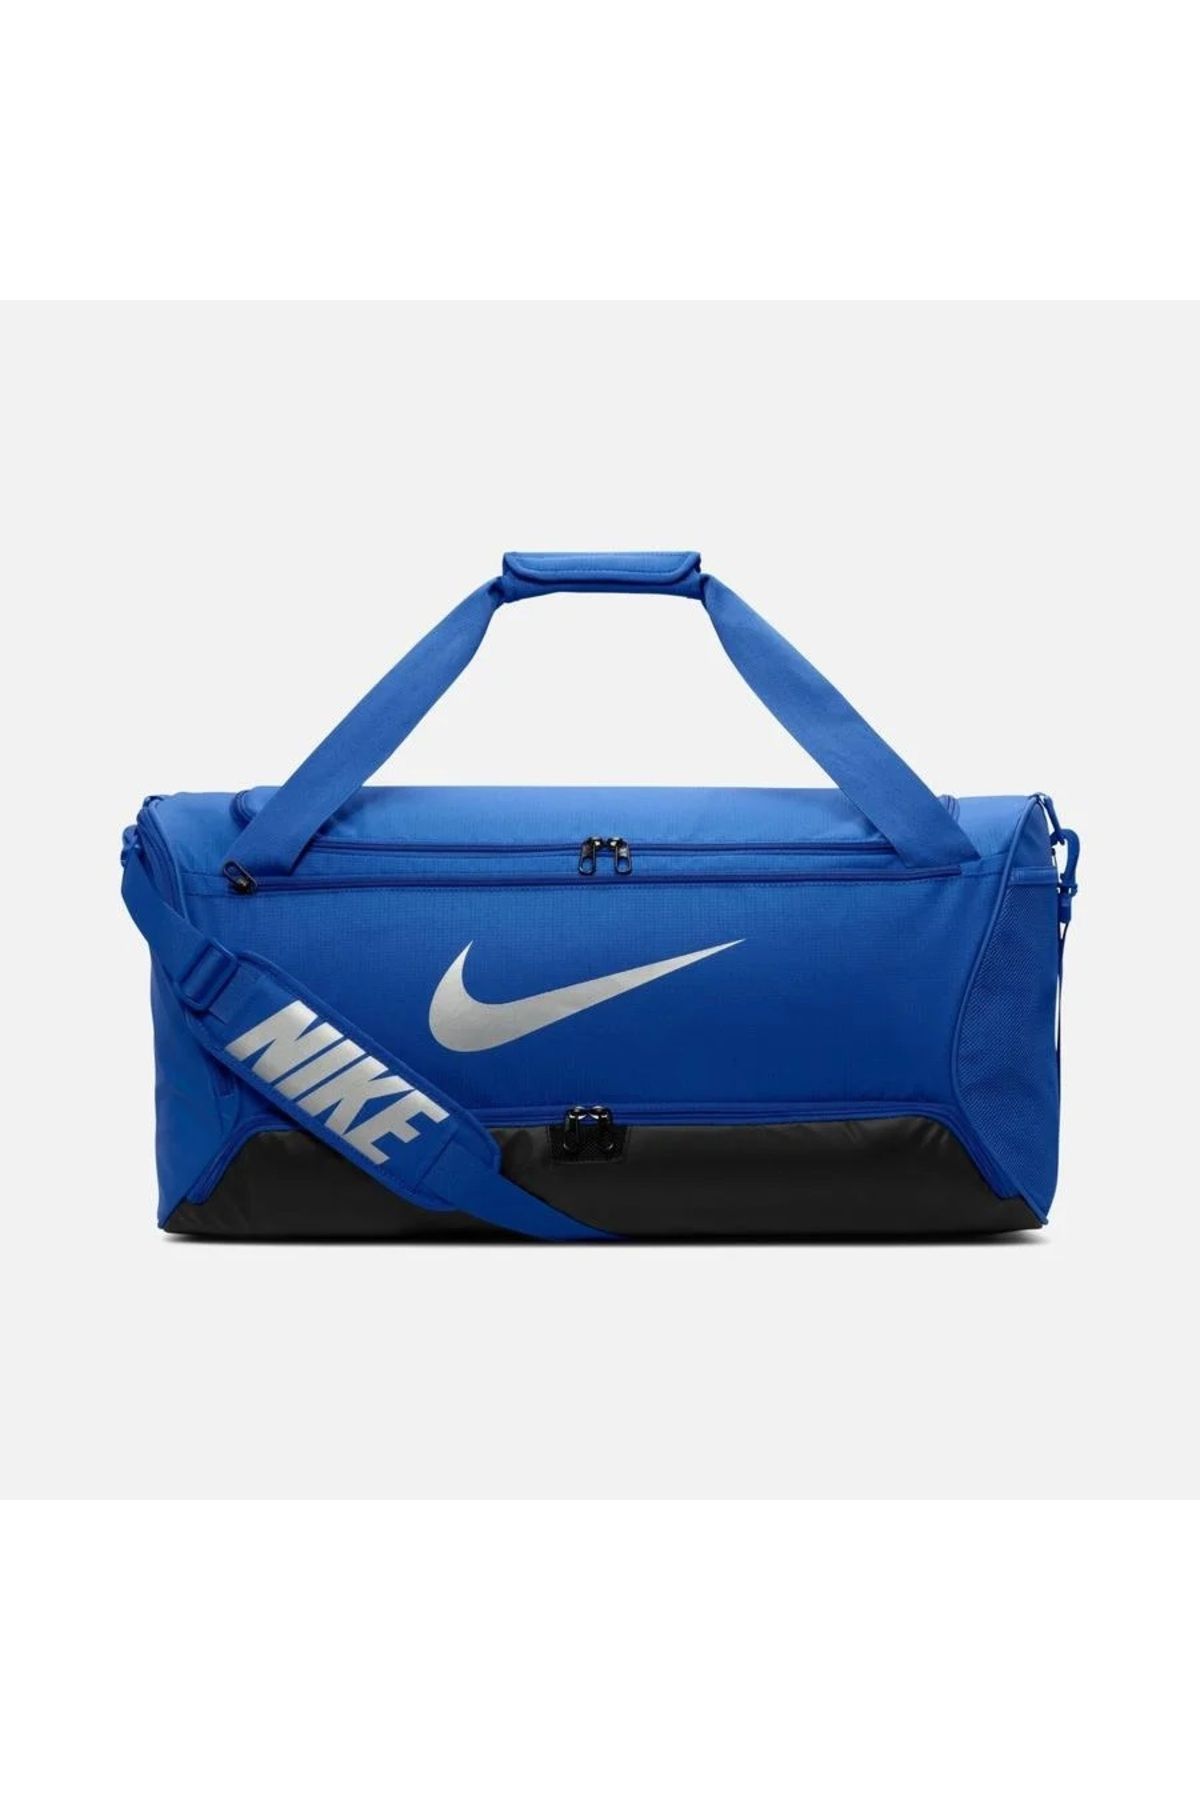 Nike Spor Çantası Nike Çanta M Mavi 60 Cm